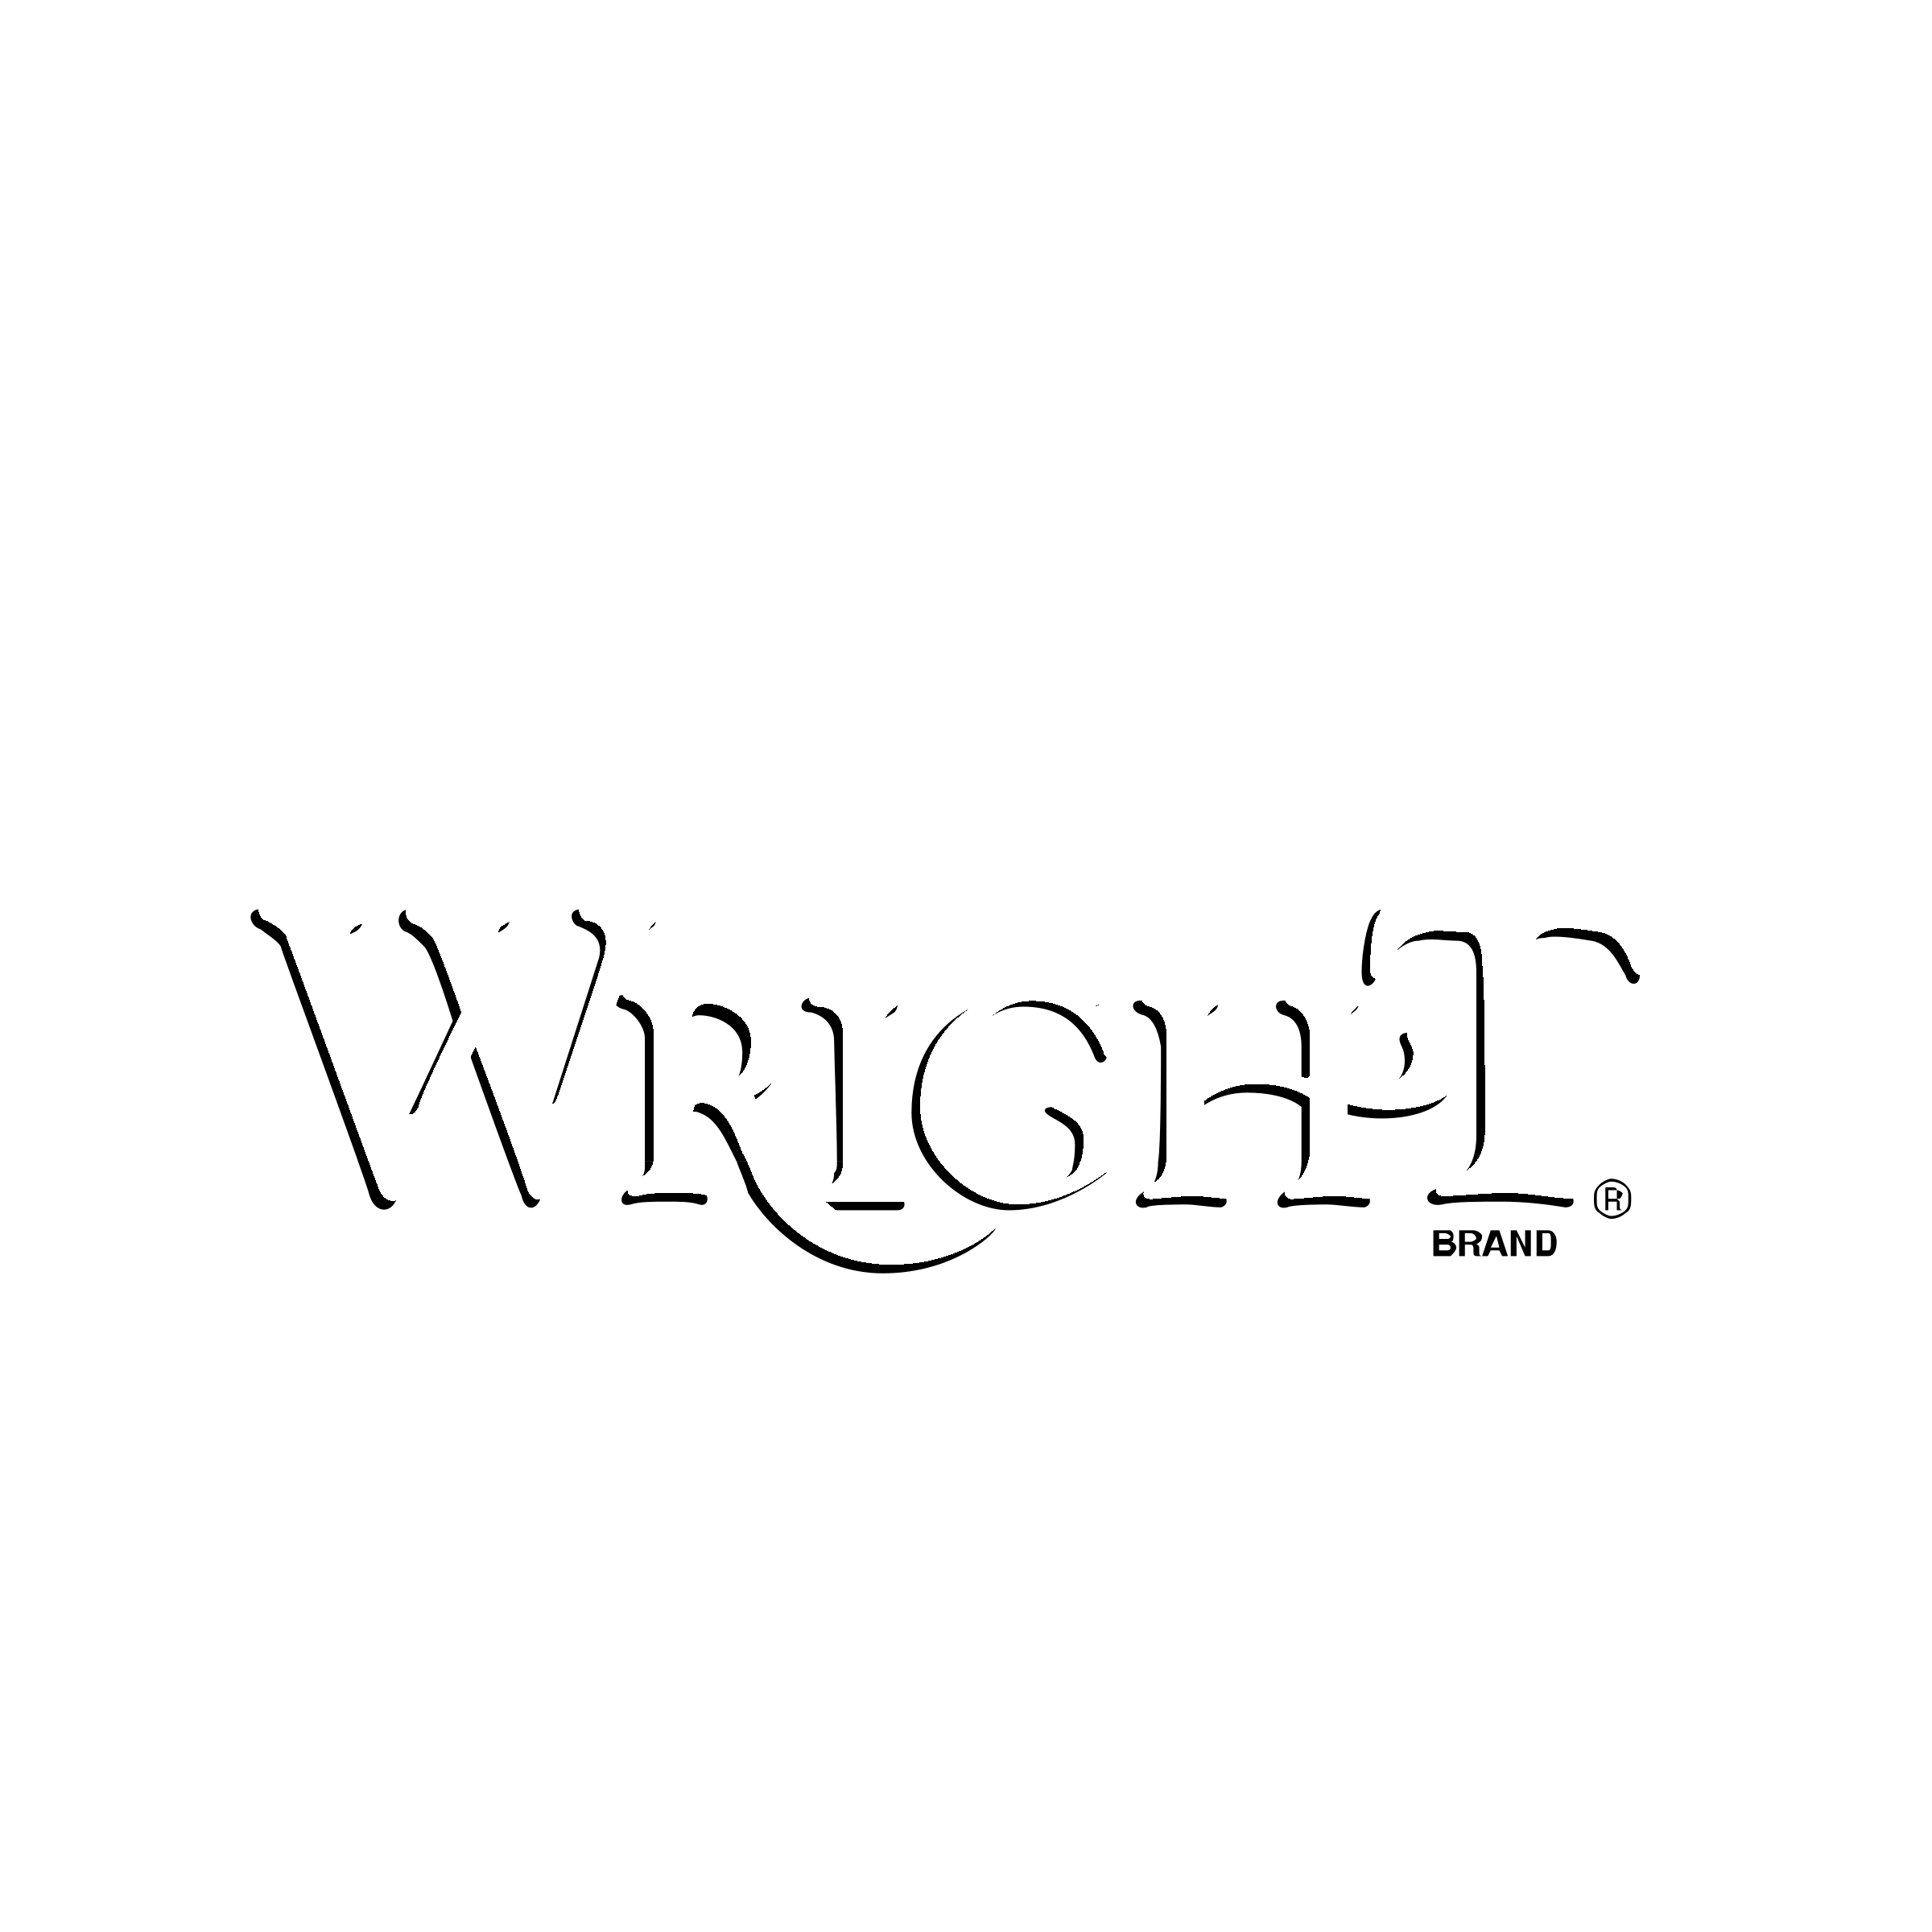 Wright Logo - Wright Logo PNG Transparent & SVG Vector - Freebie Supply